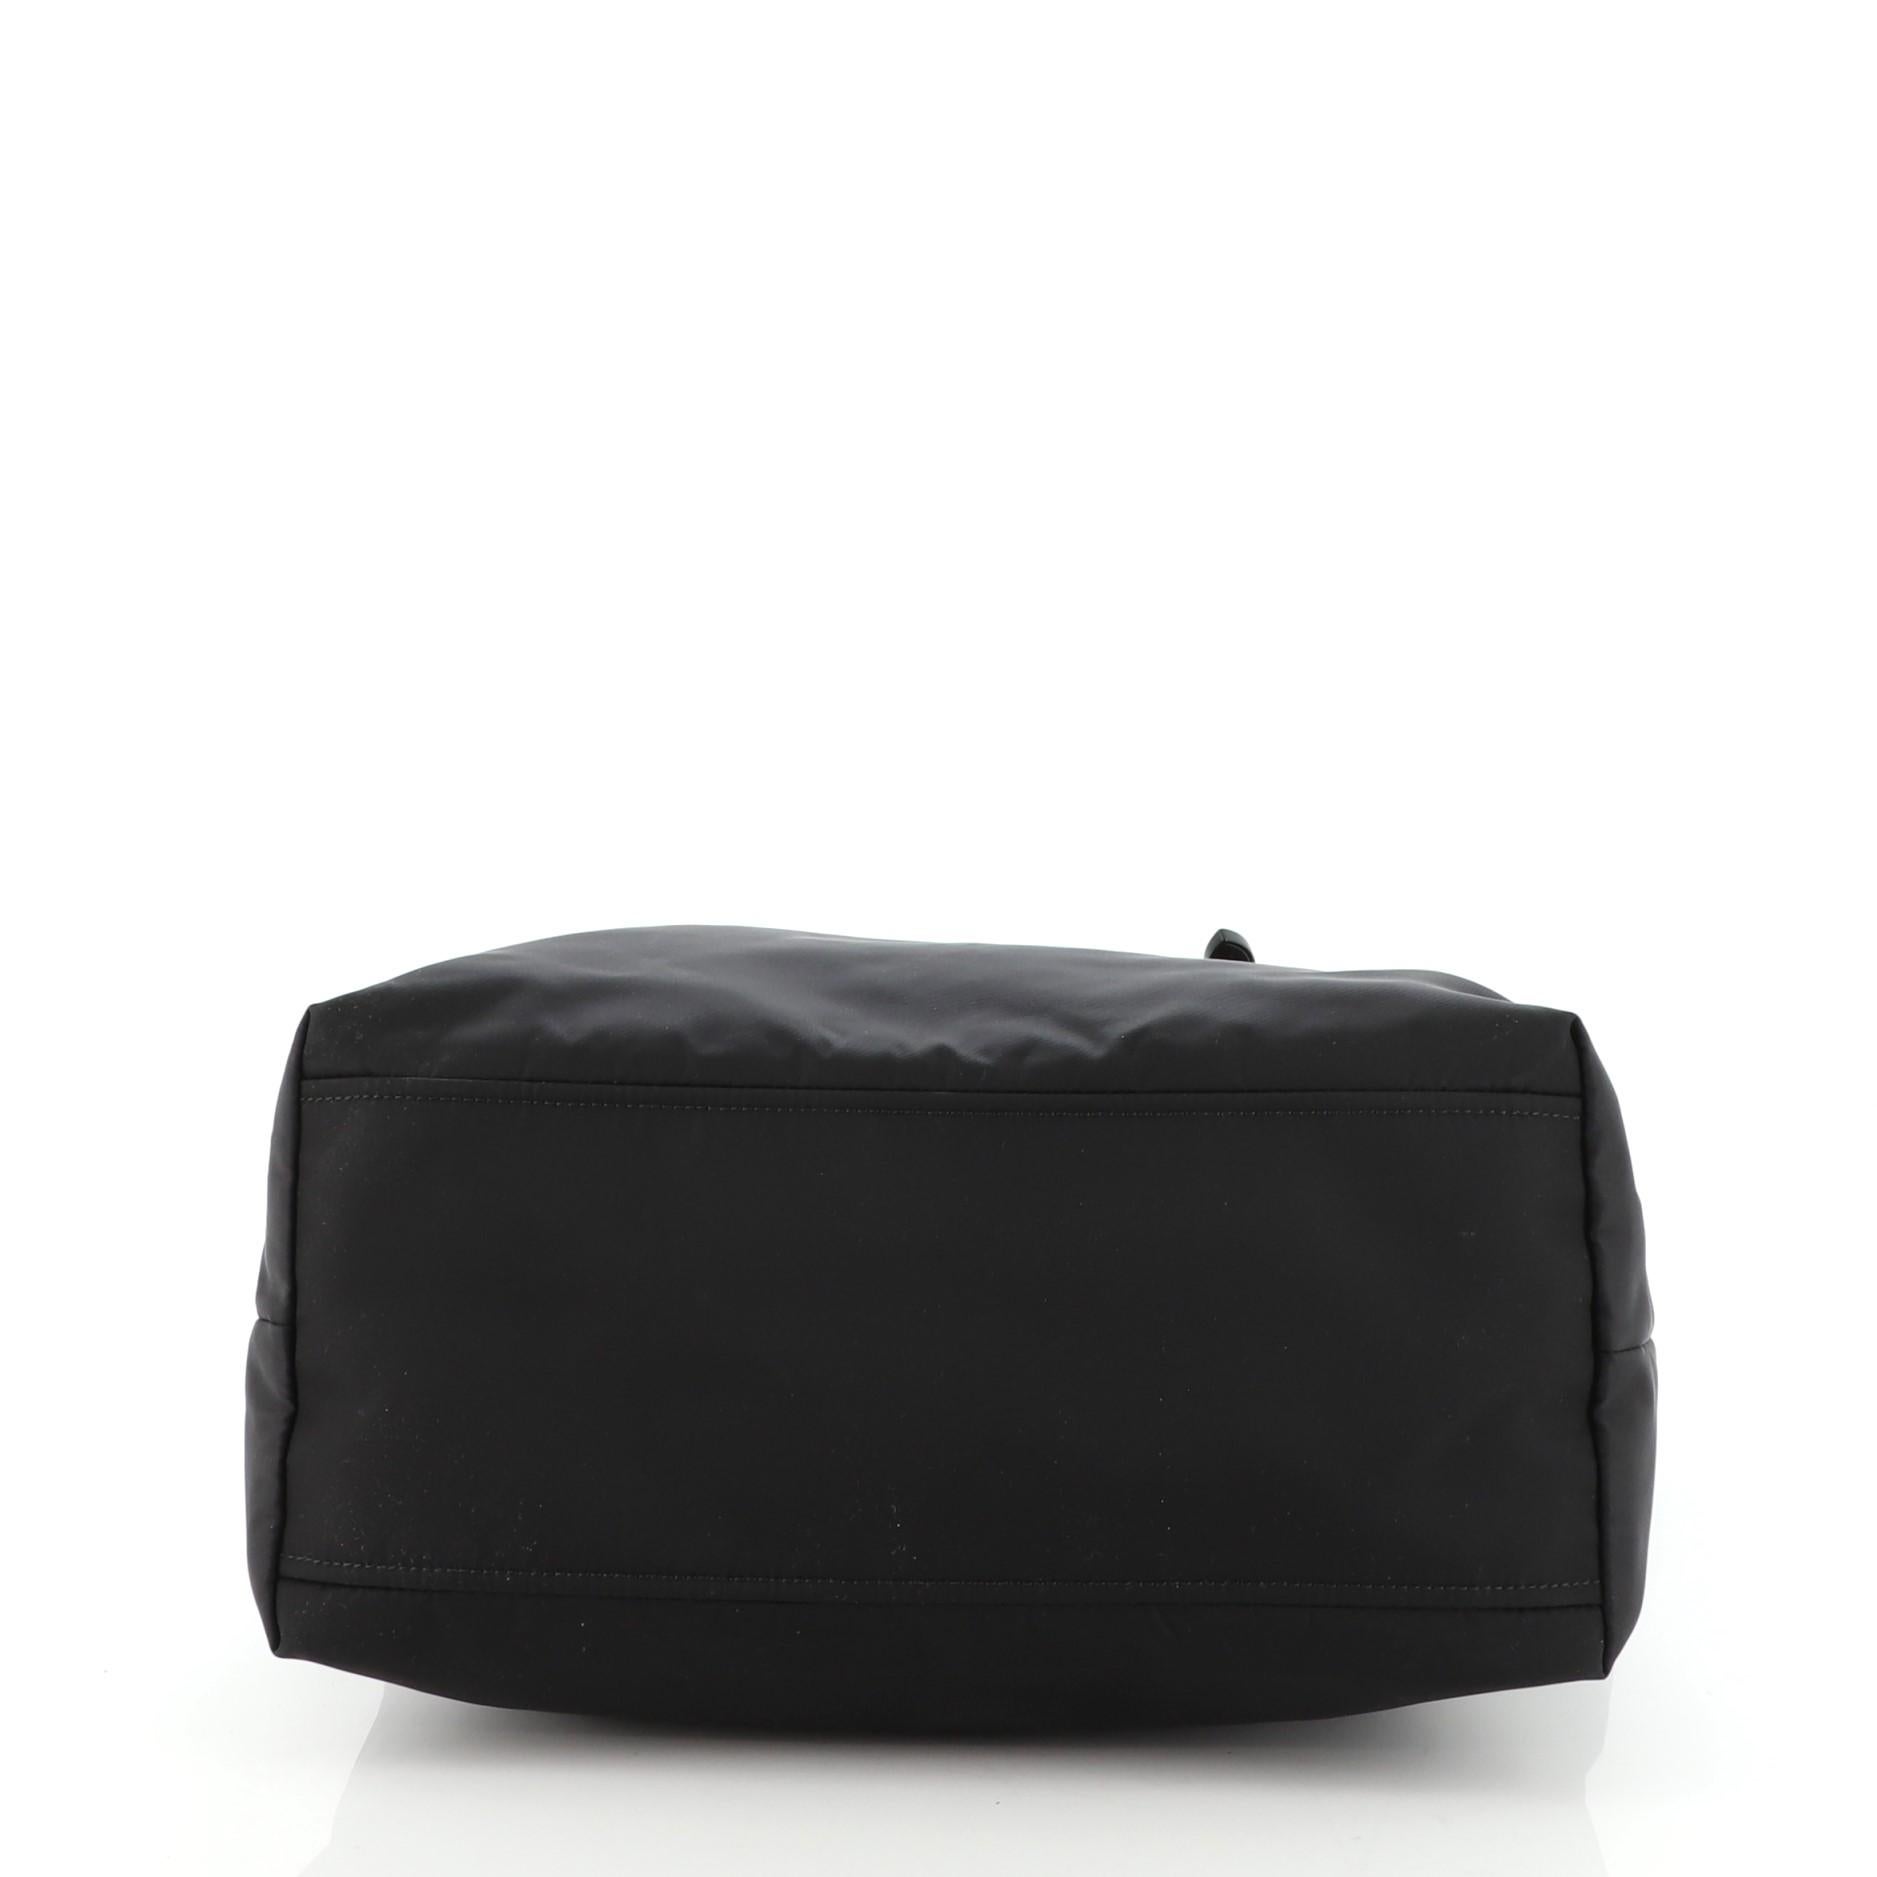 prada nylon tote bag with leather trim